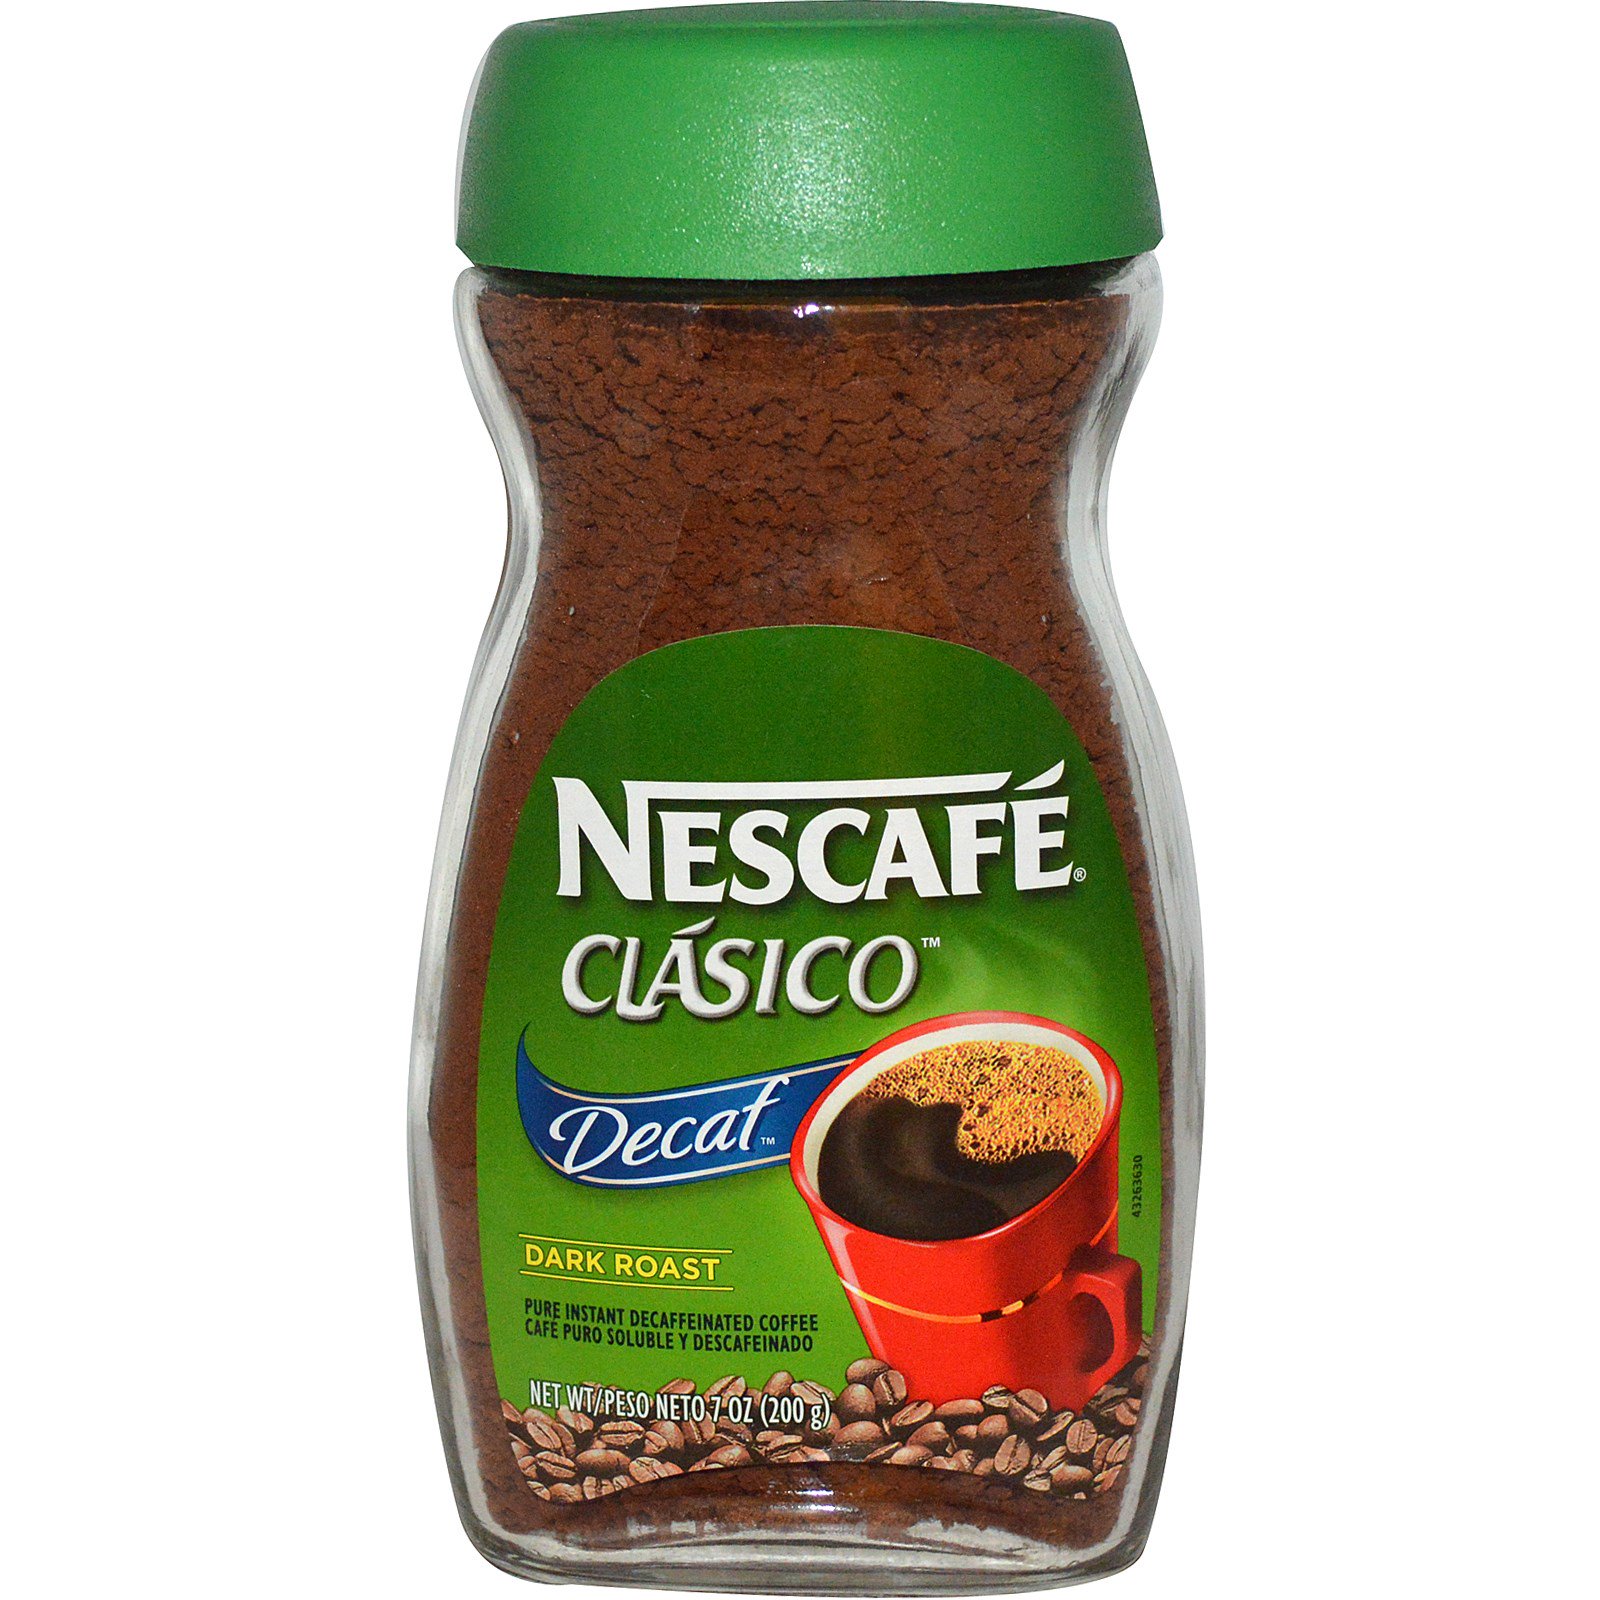 Какой кофе без кофеина. Кофе без кофеина Nescafe. Нескафе без кофеина растворимый. Кофе растворимый Nescafe Classic Decaf без кофеина. Кофе Якобс без кофеина.